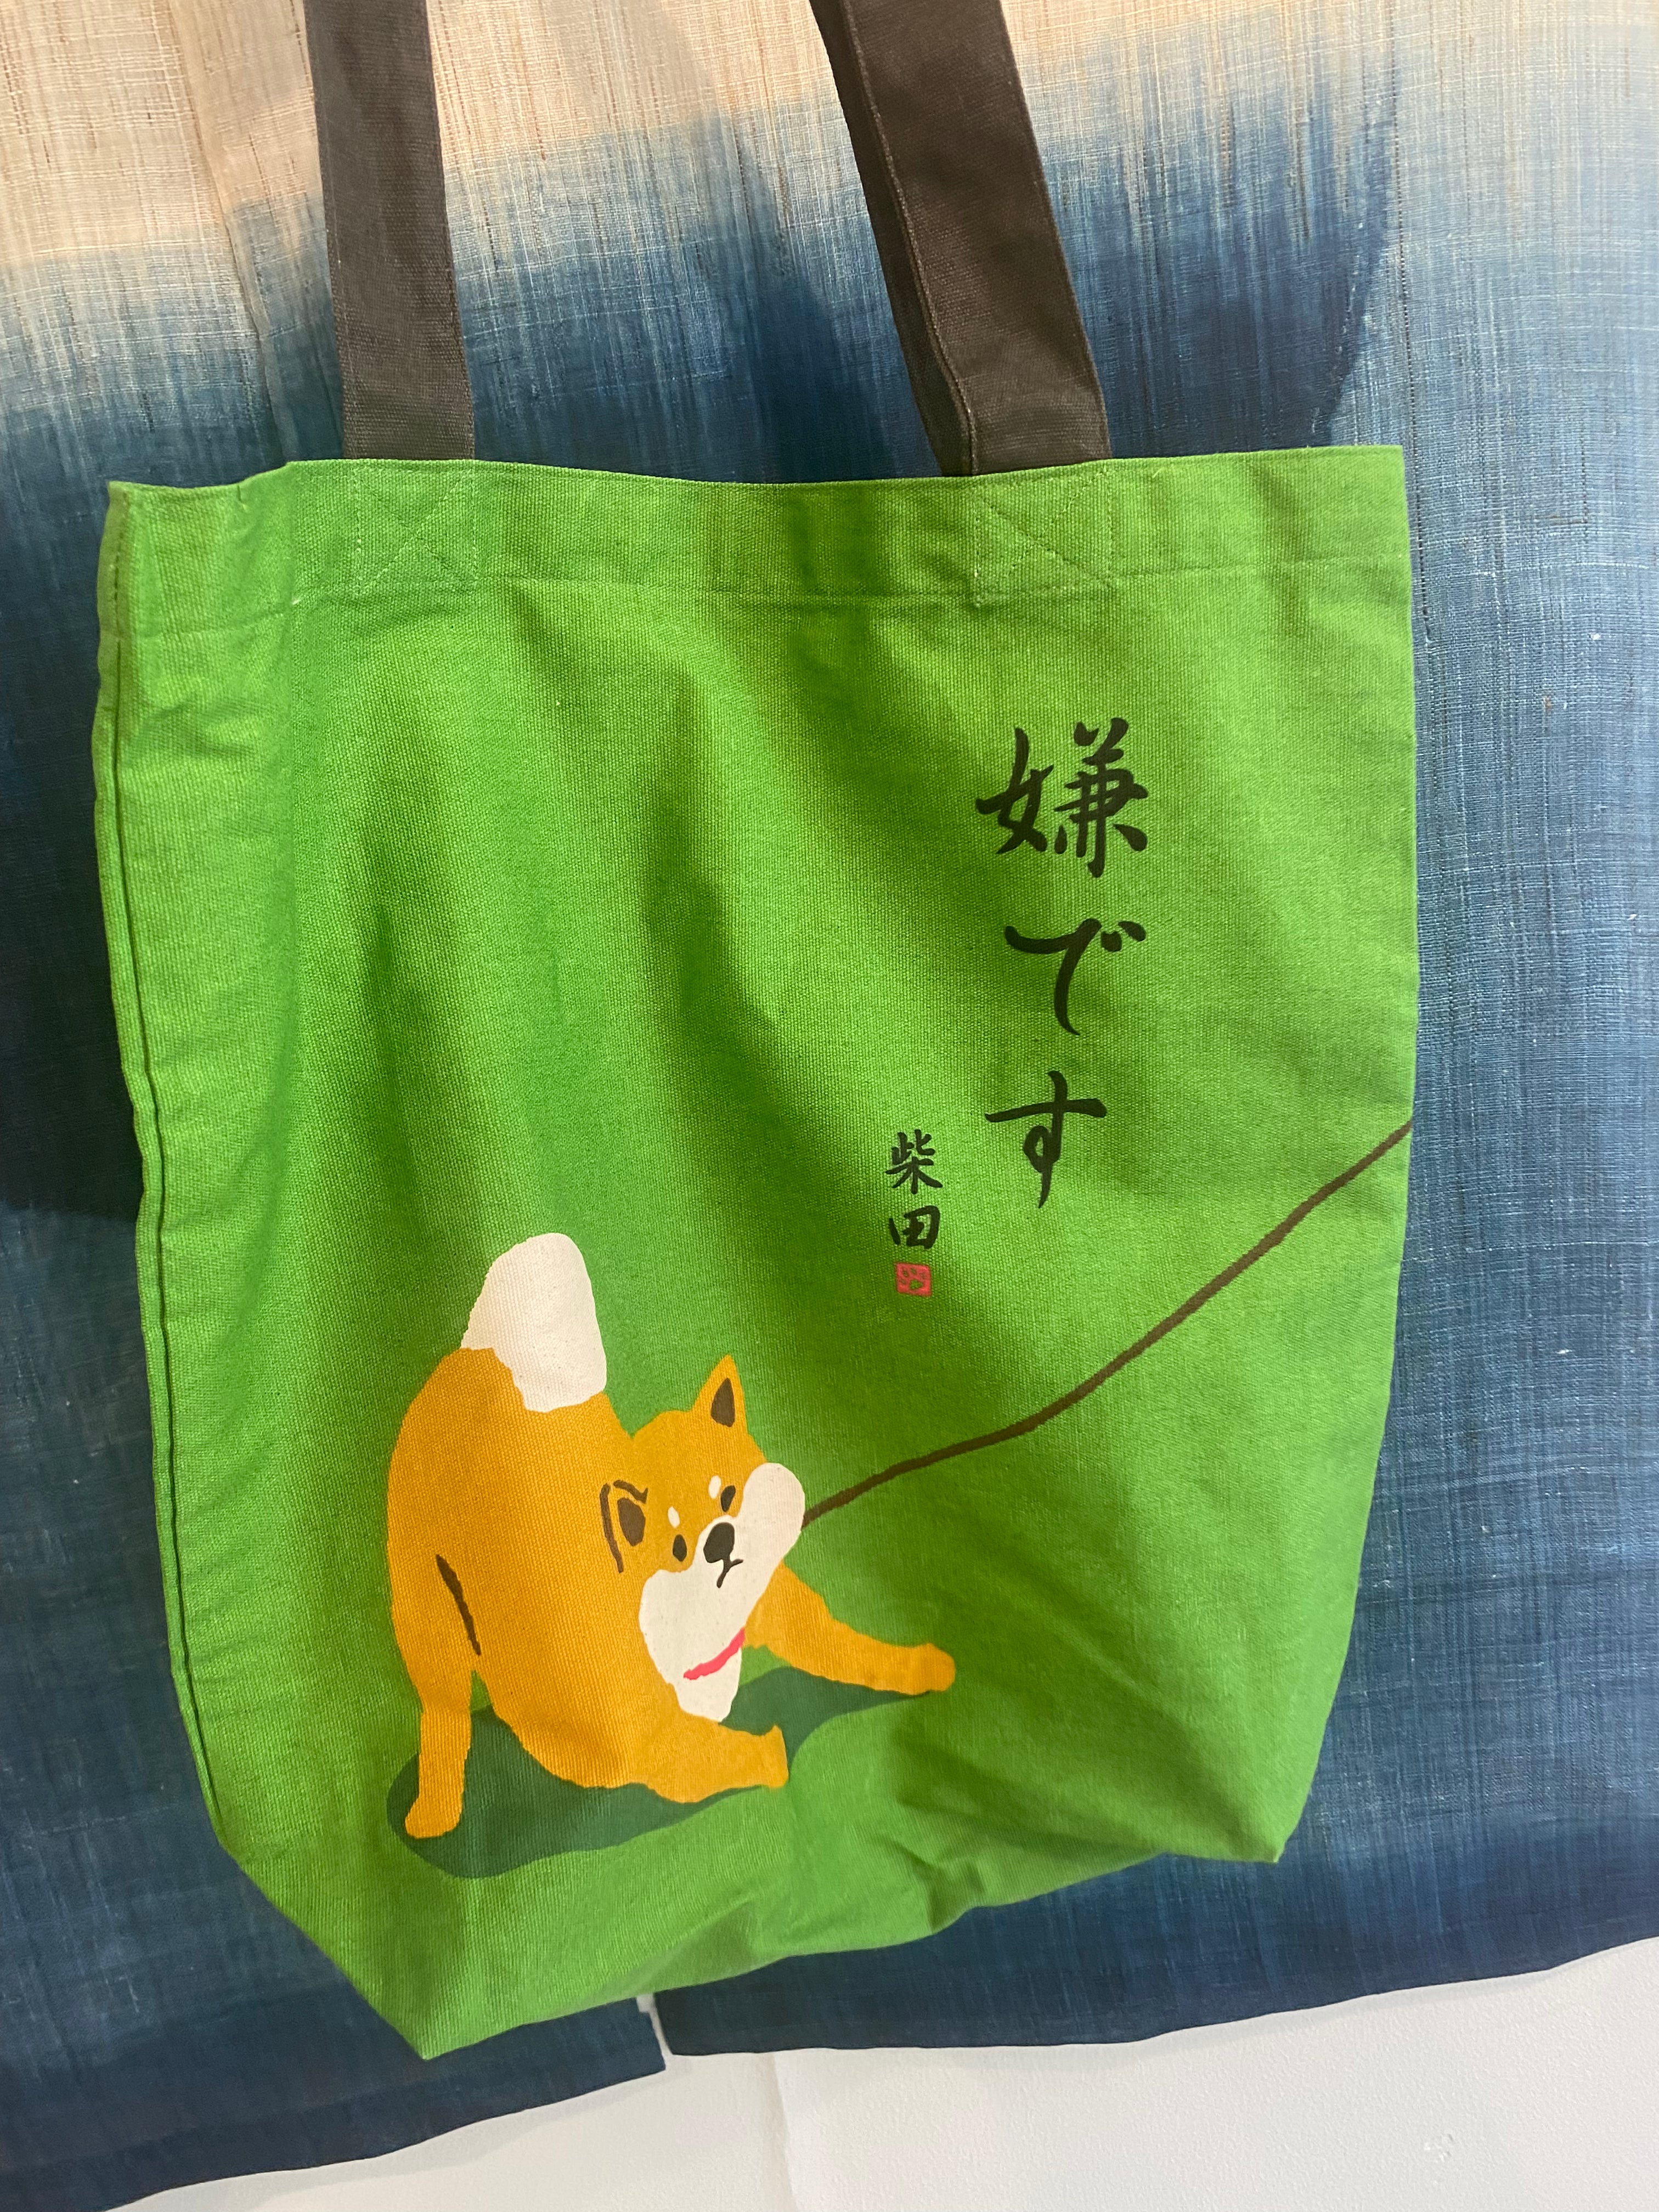 Tote bag green with stubborn shiba